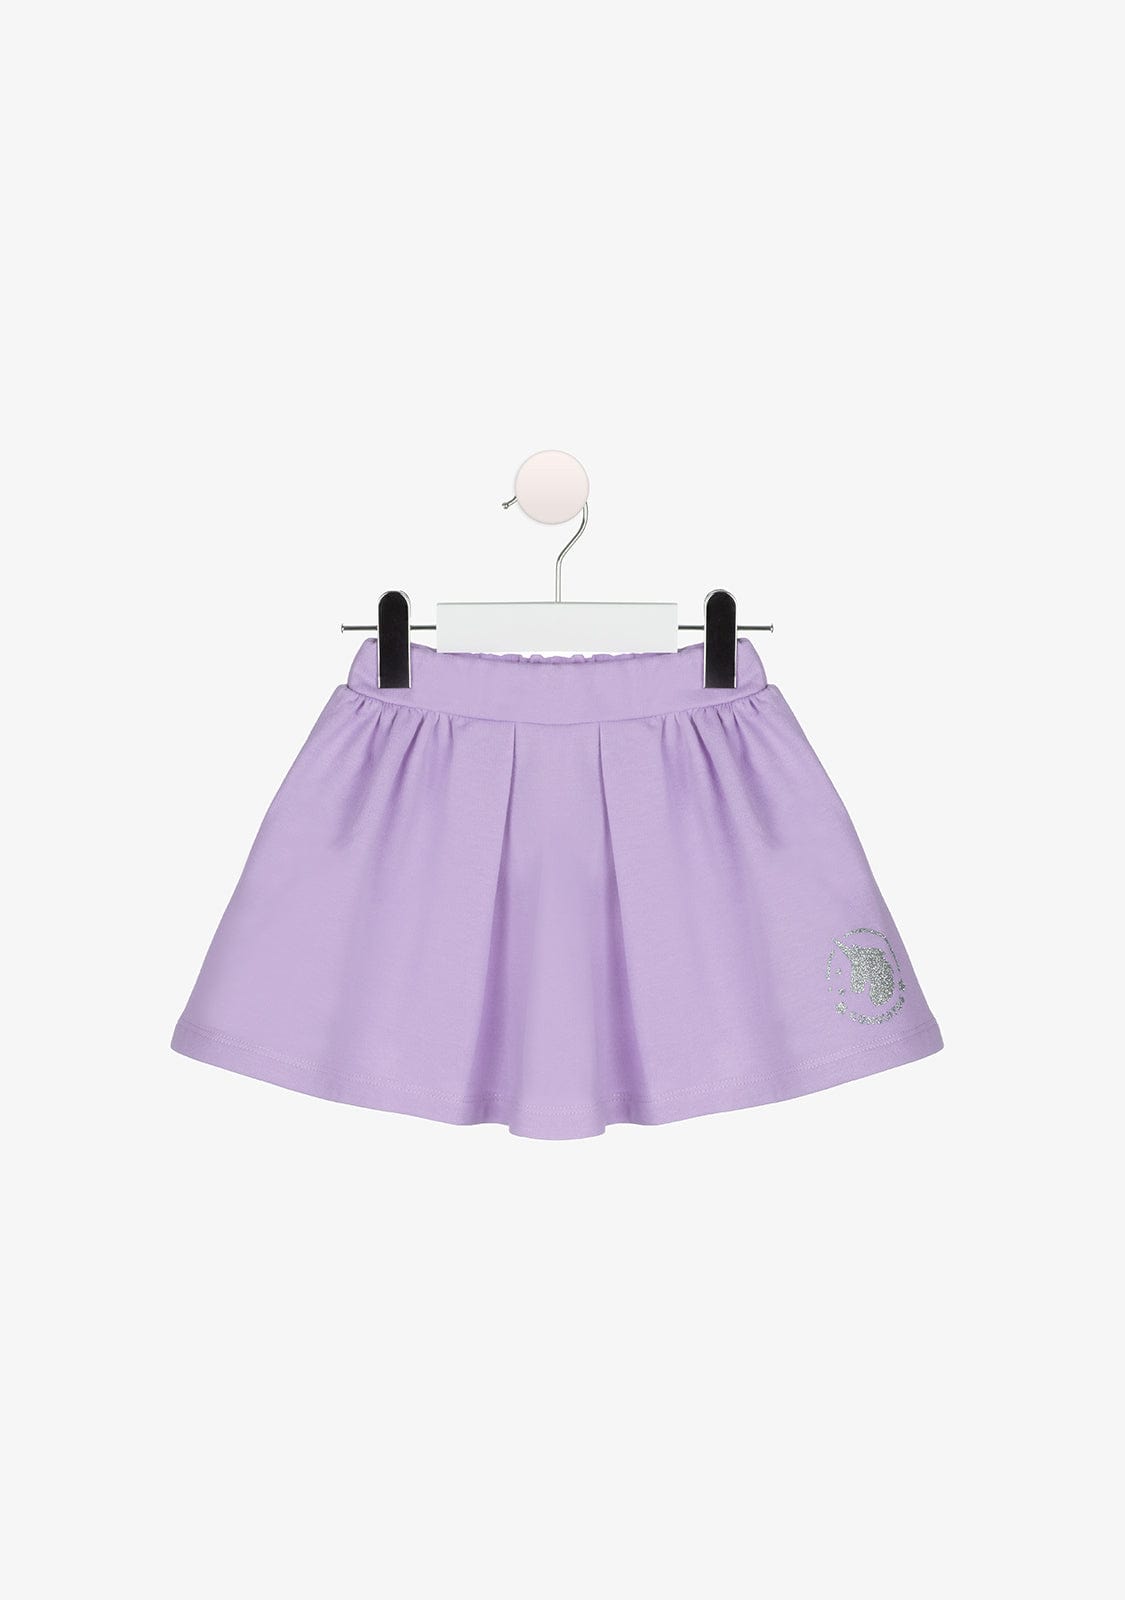 CONGUITOS TEXTIL Clothing Girl's Mauve Unicorn Skirt